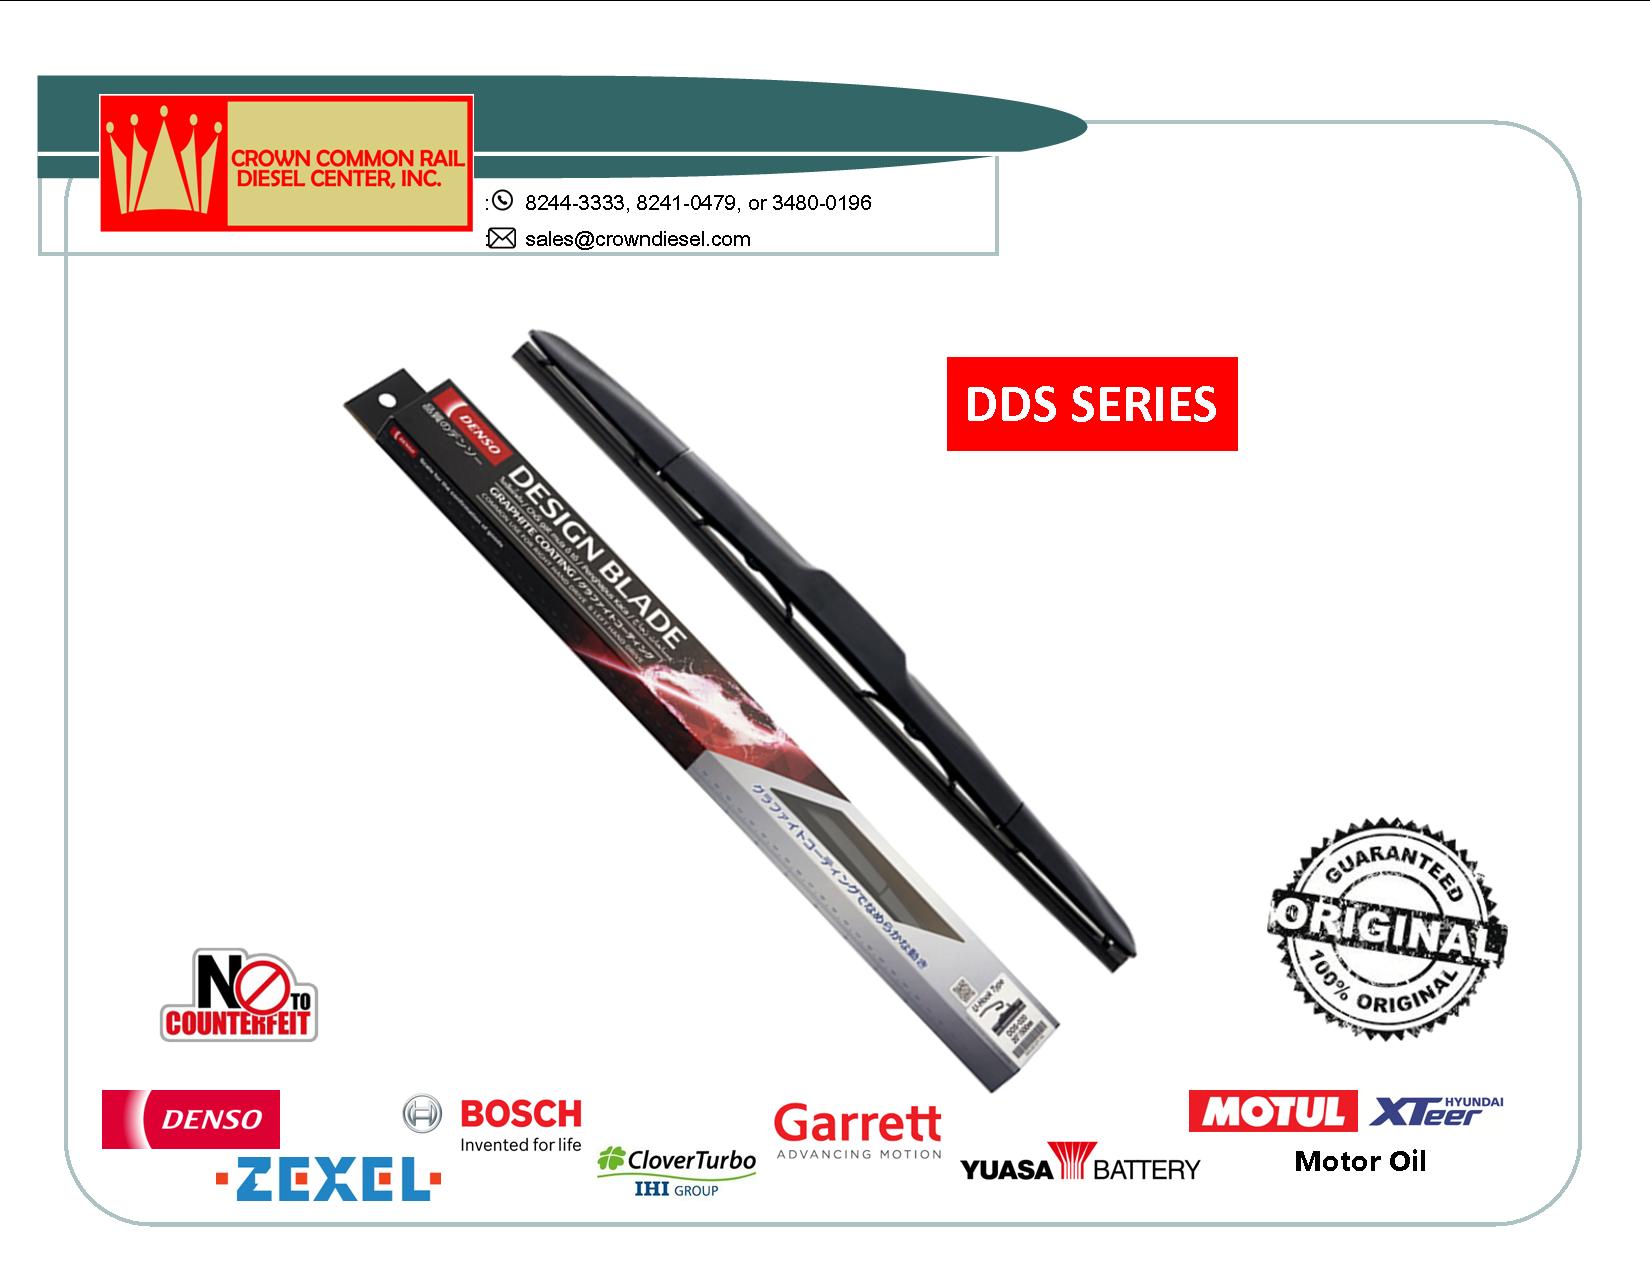 Original DENSO Design Wiper Blade Standard (DDS Series) with graphite .